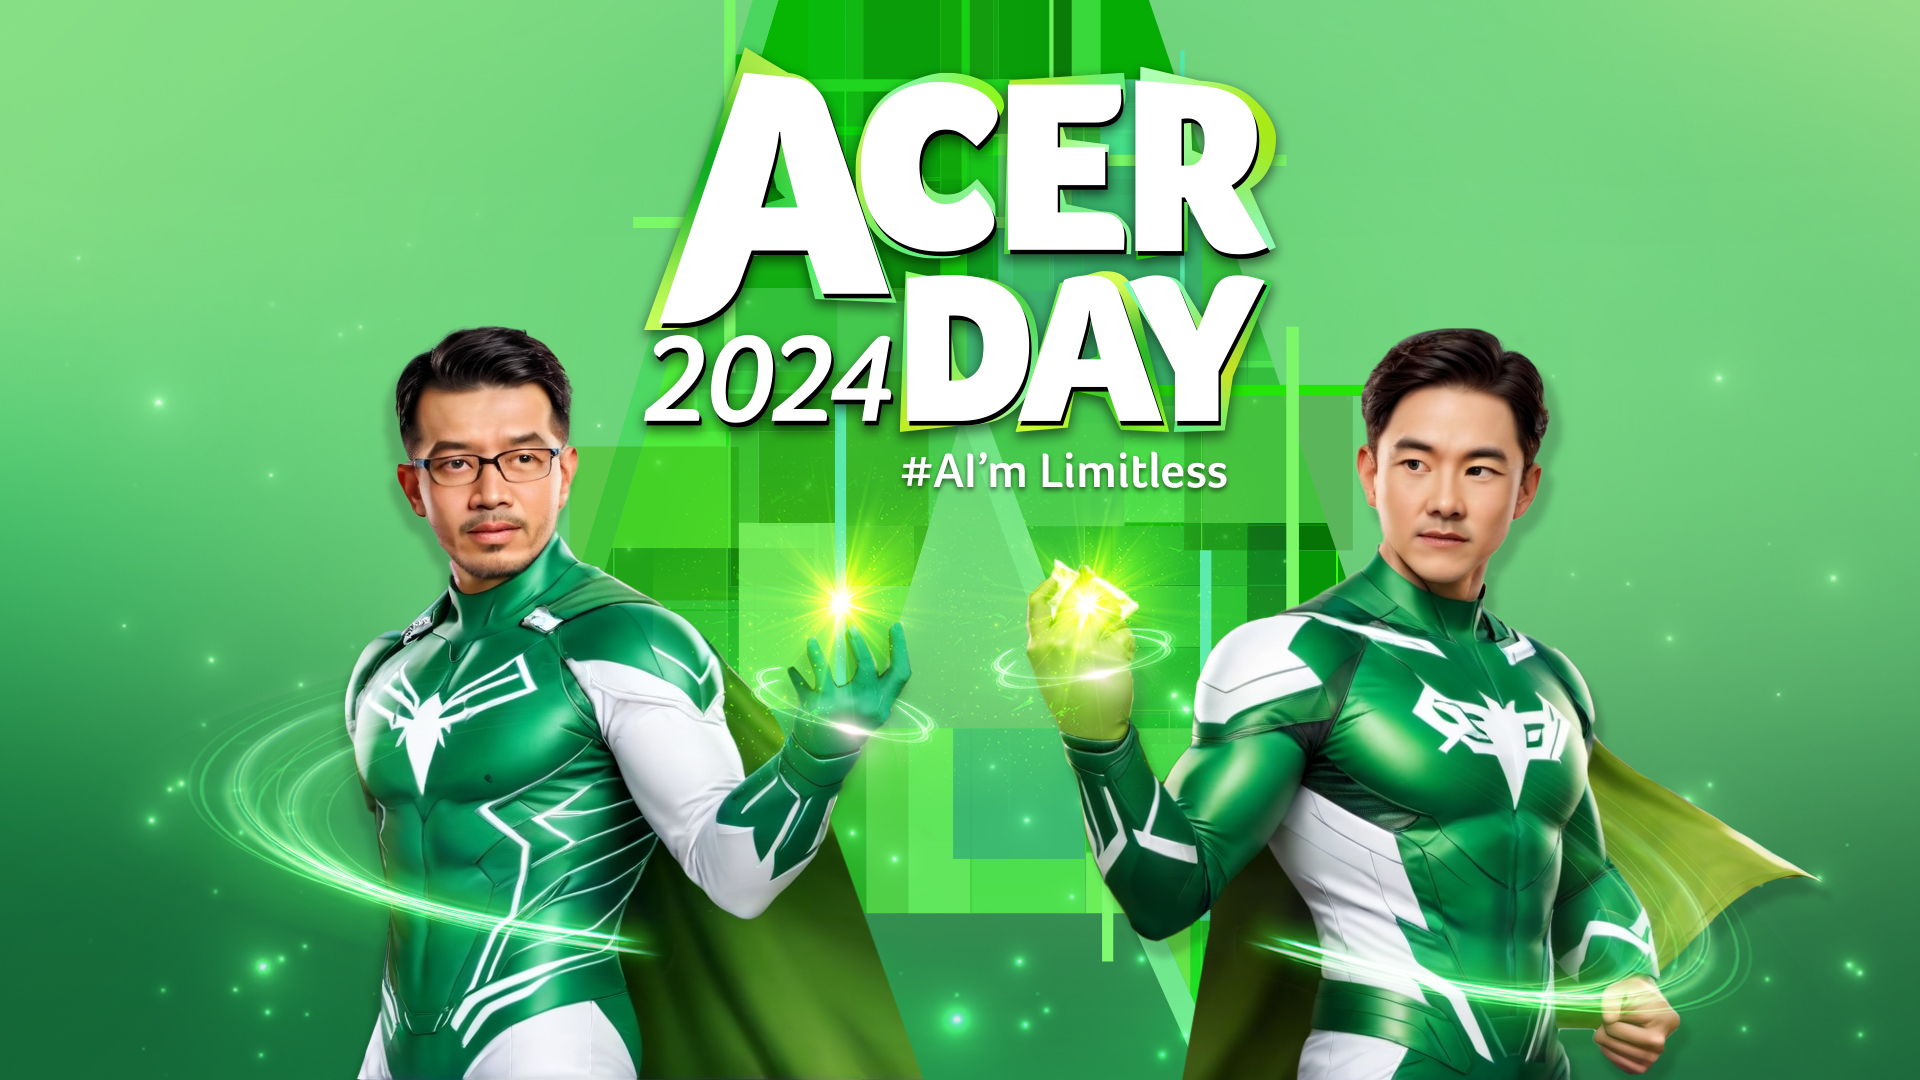 Acer Day 2024 “AI'm Limitless” สู่ความเป็นไปได้ที่ไร้ขีดจำกัดด้วย AI